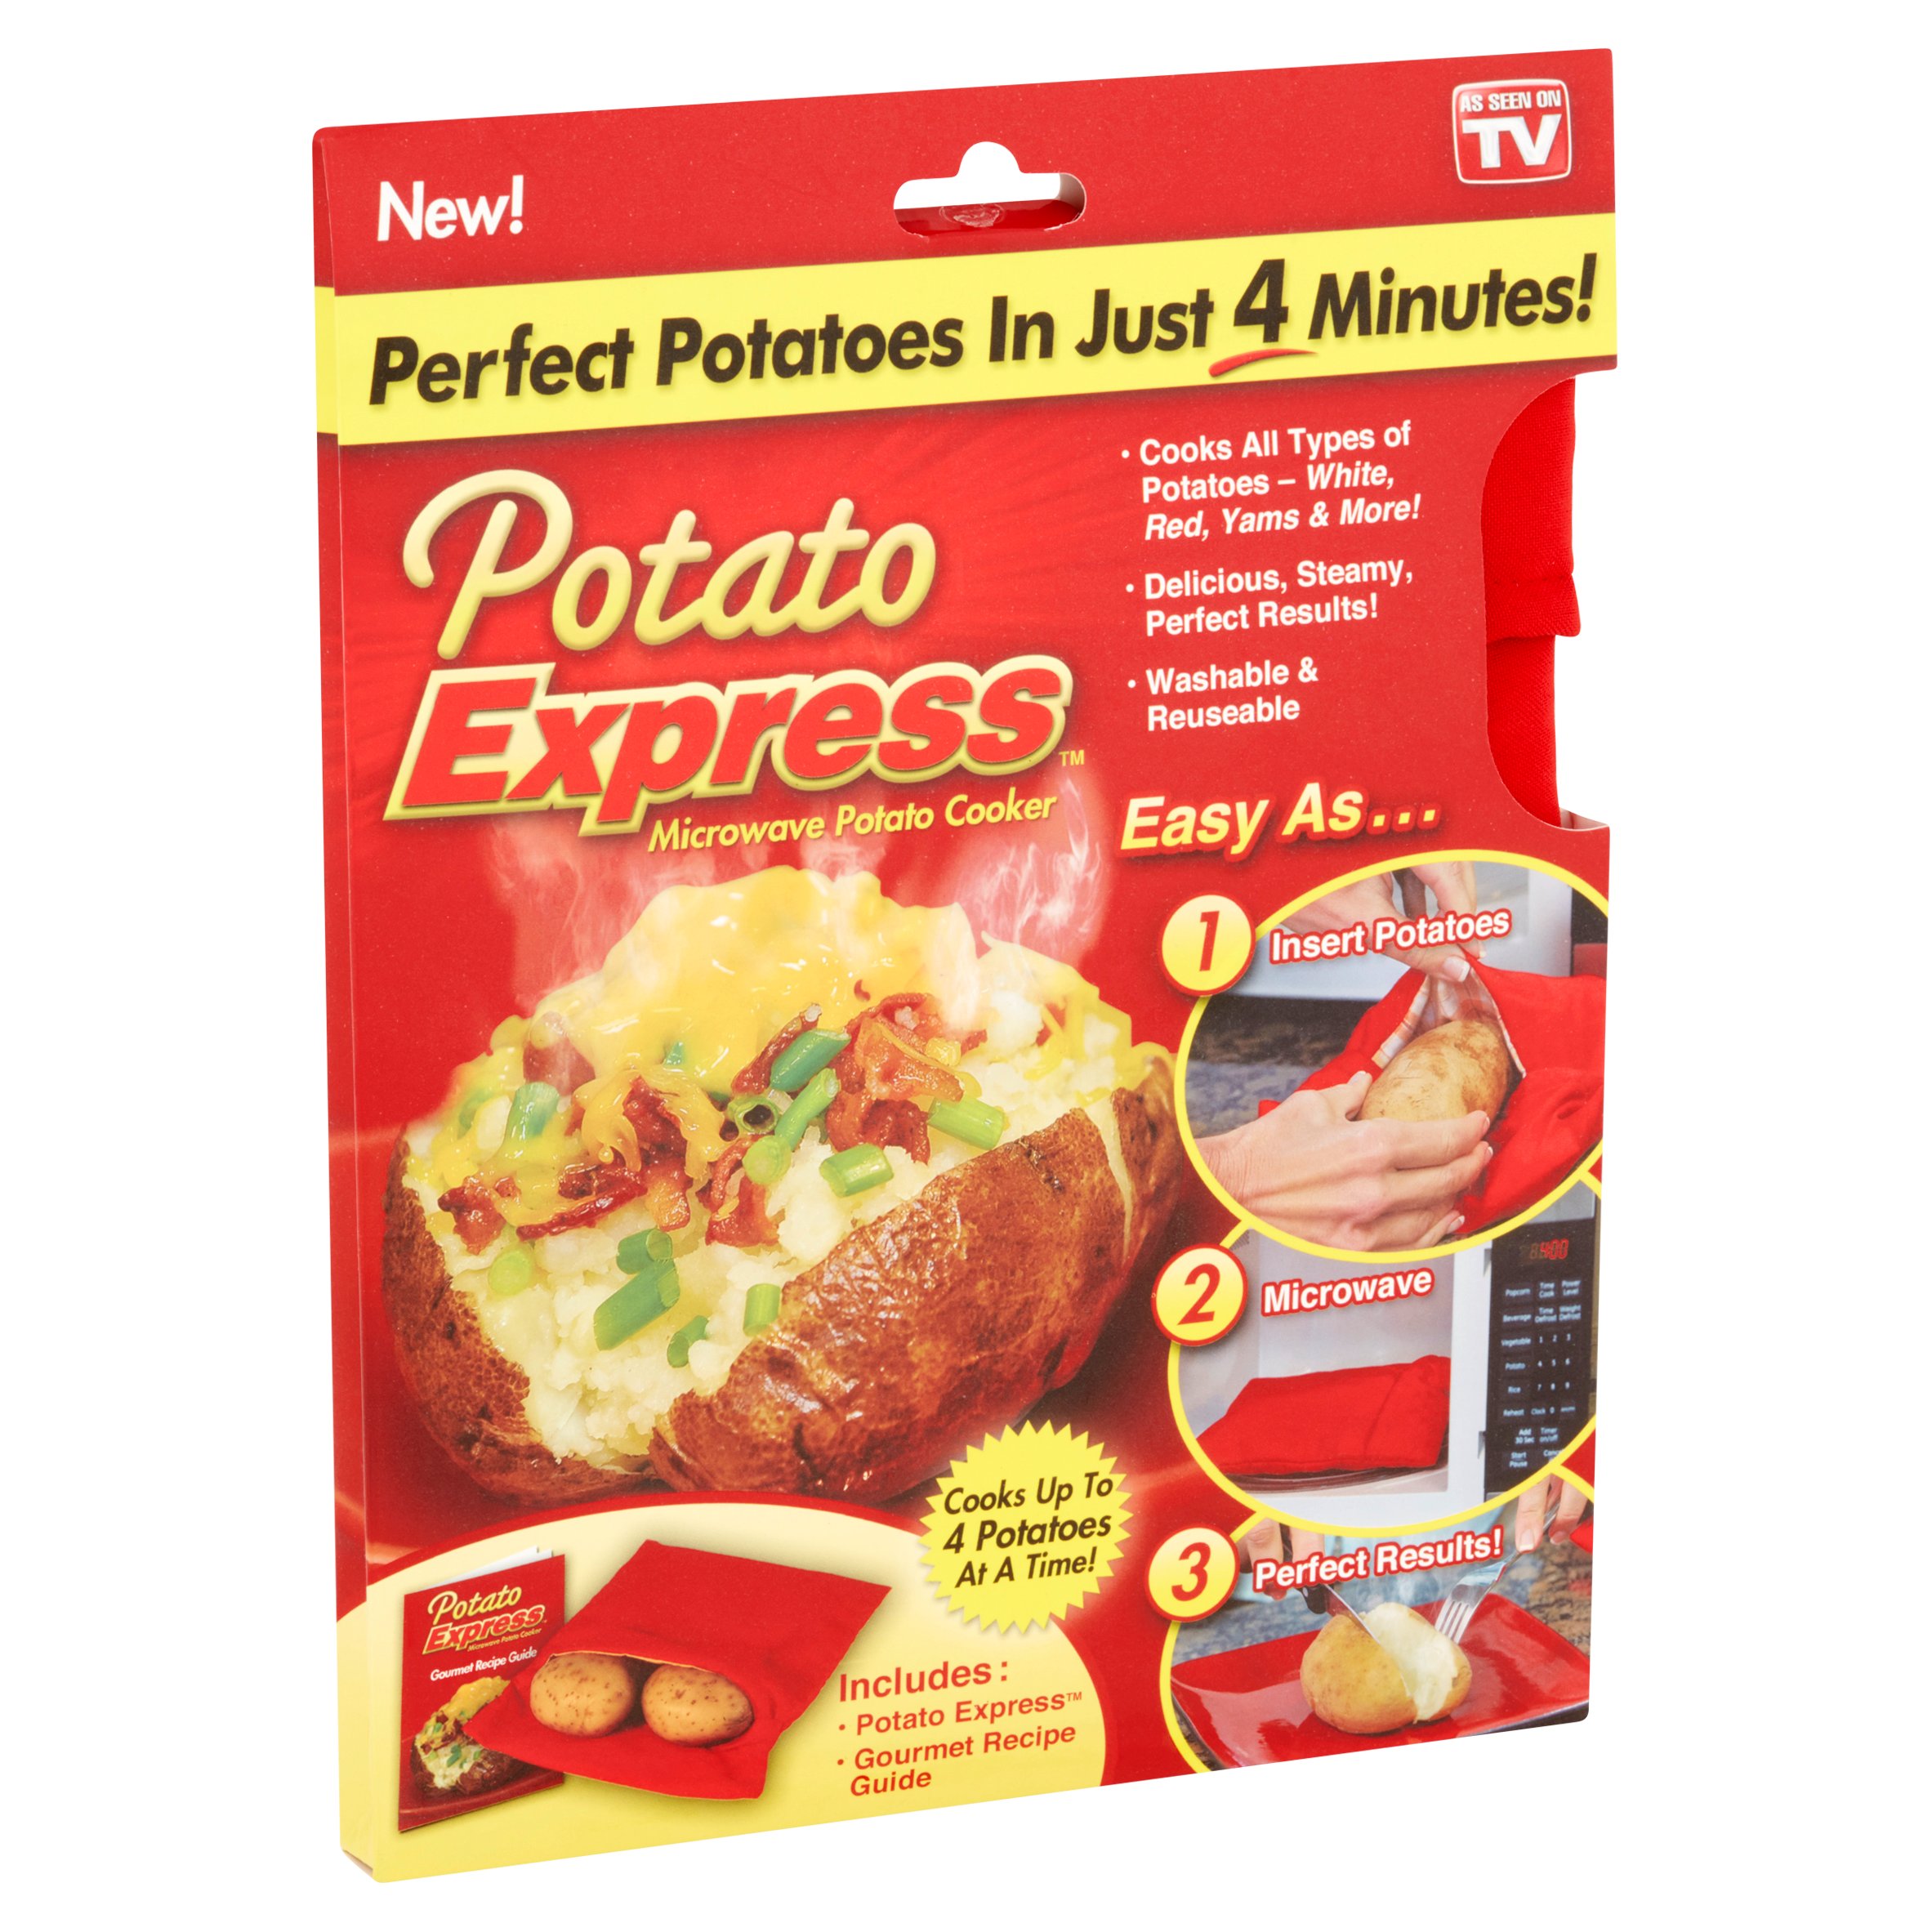 As Seen on TV Potato Express, Microwave Potato Cooker - image 2 of 4